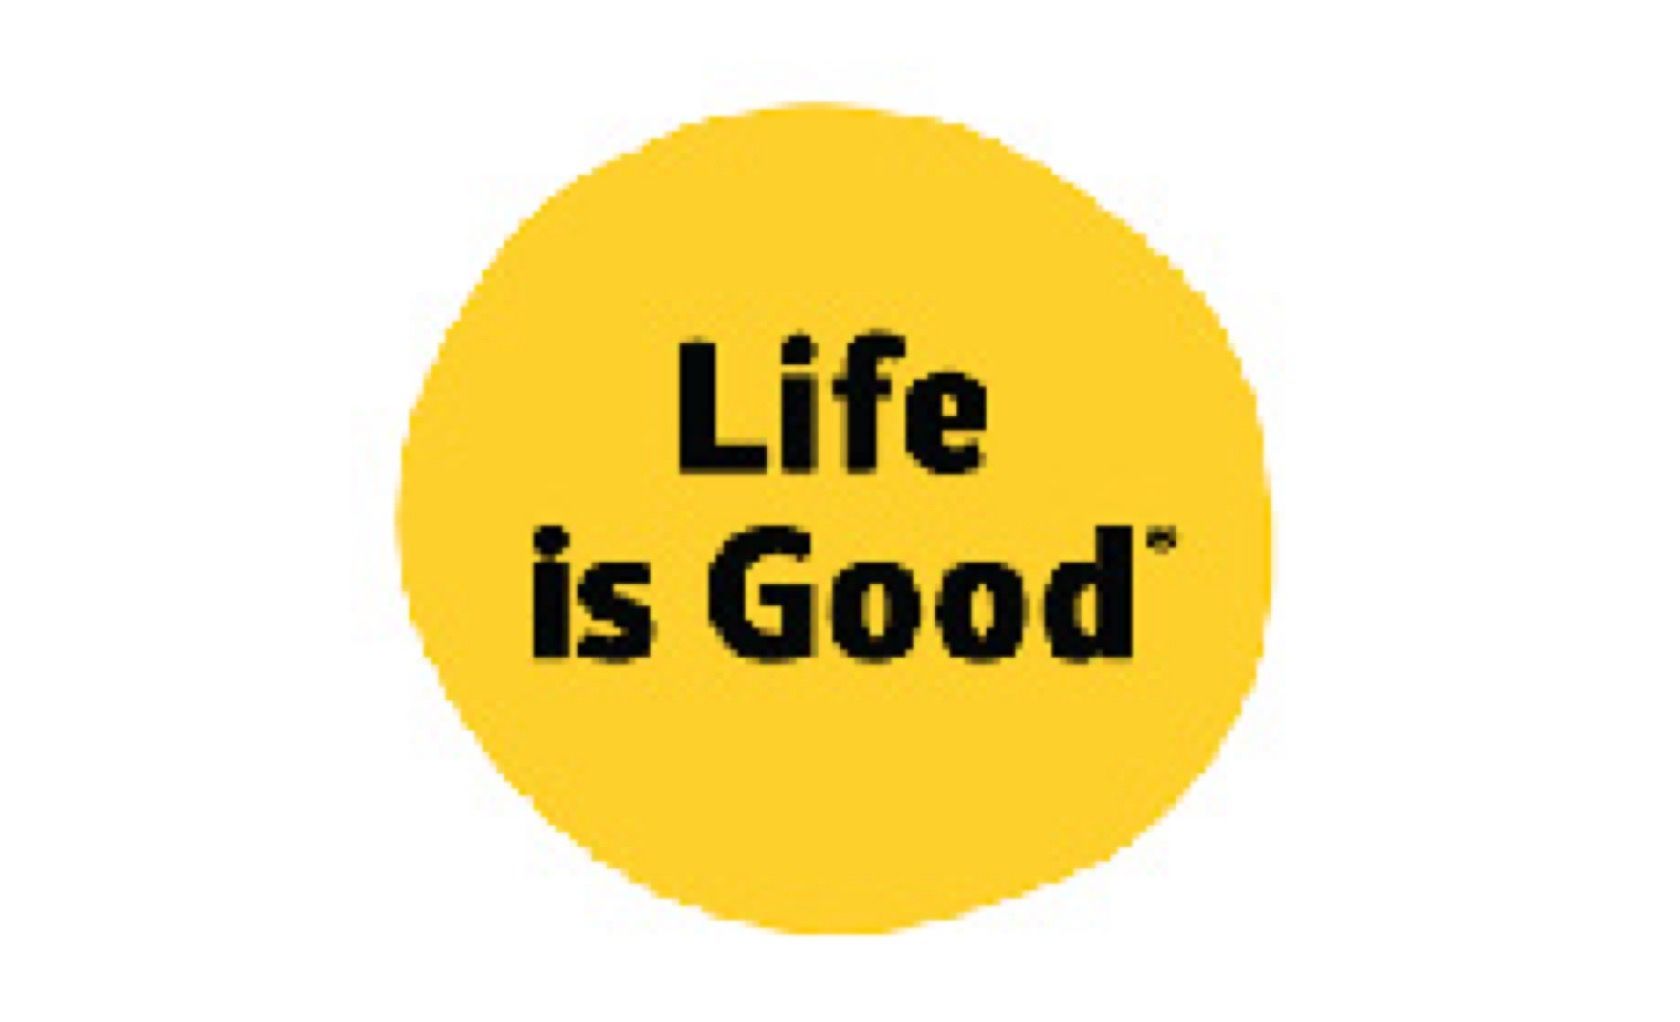 Life is good family. Life is good. Life is good картинки. Life is good лого. Life II good.